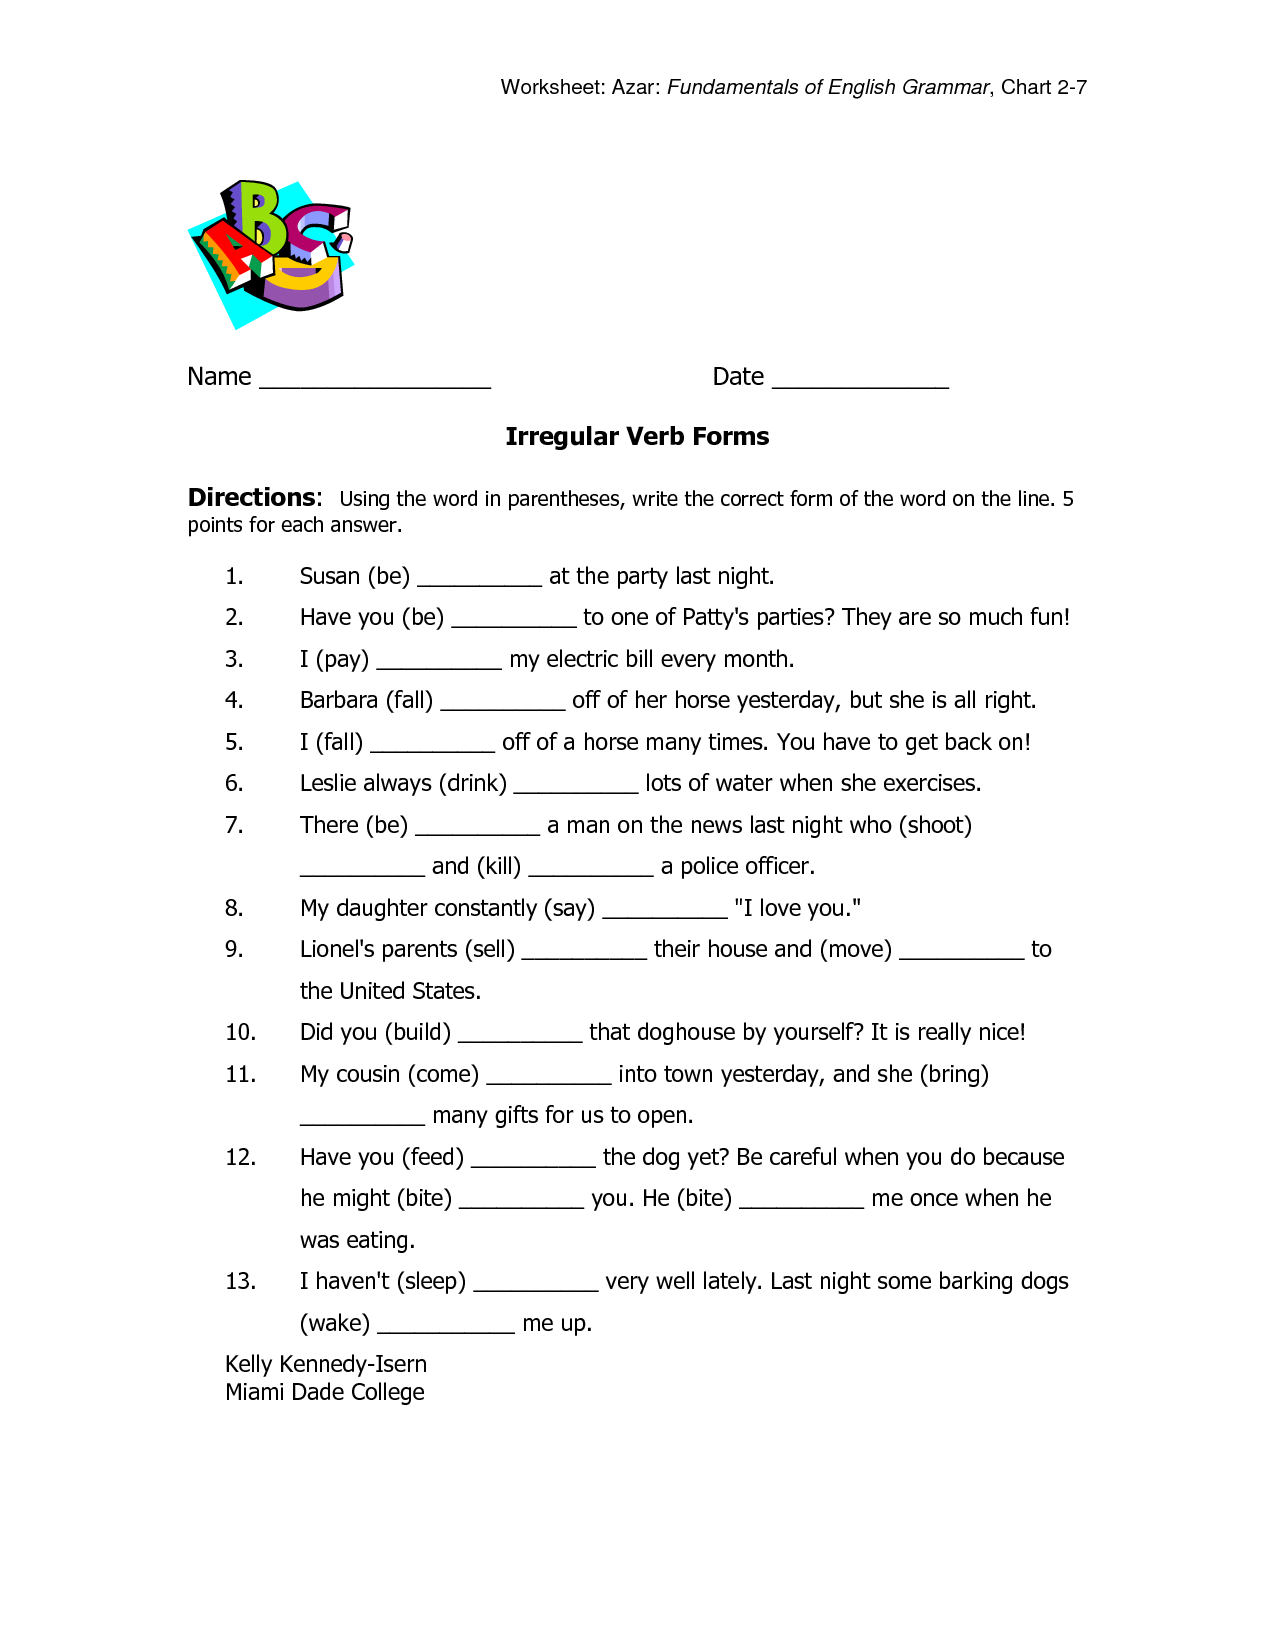 11 Best Images Of Present Tense Verbs Worksheets 3rd Grade Verb Tense Worksheets 3rd Grade